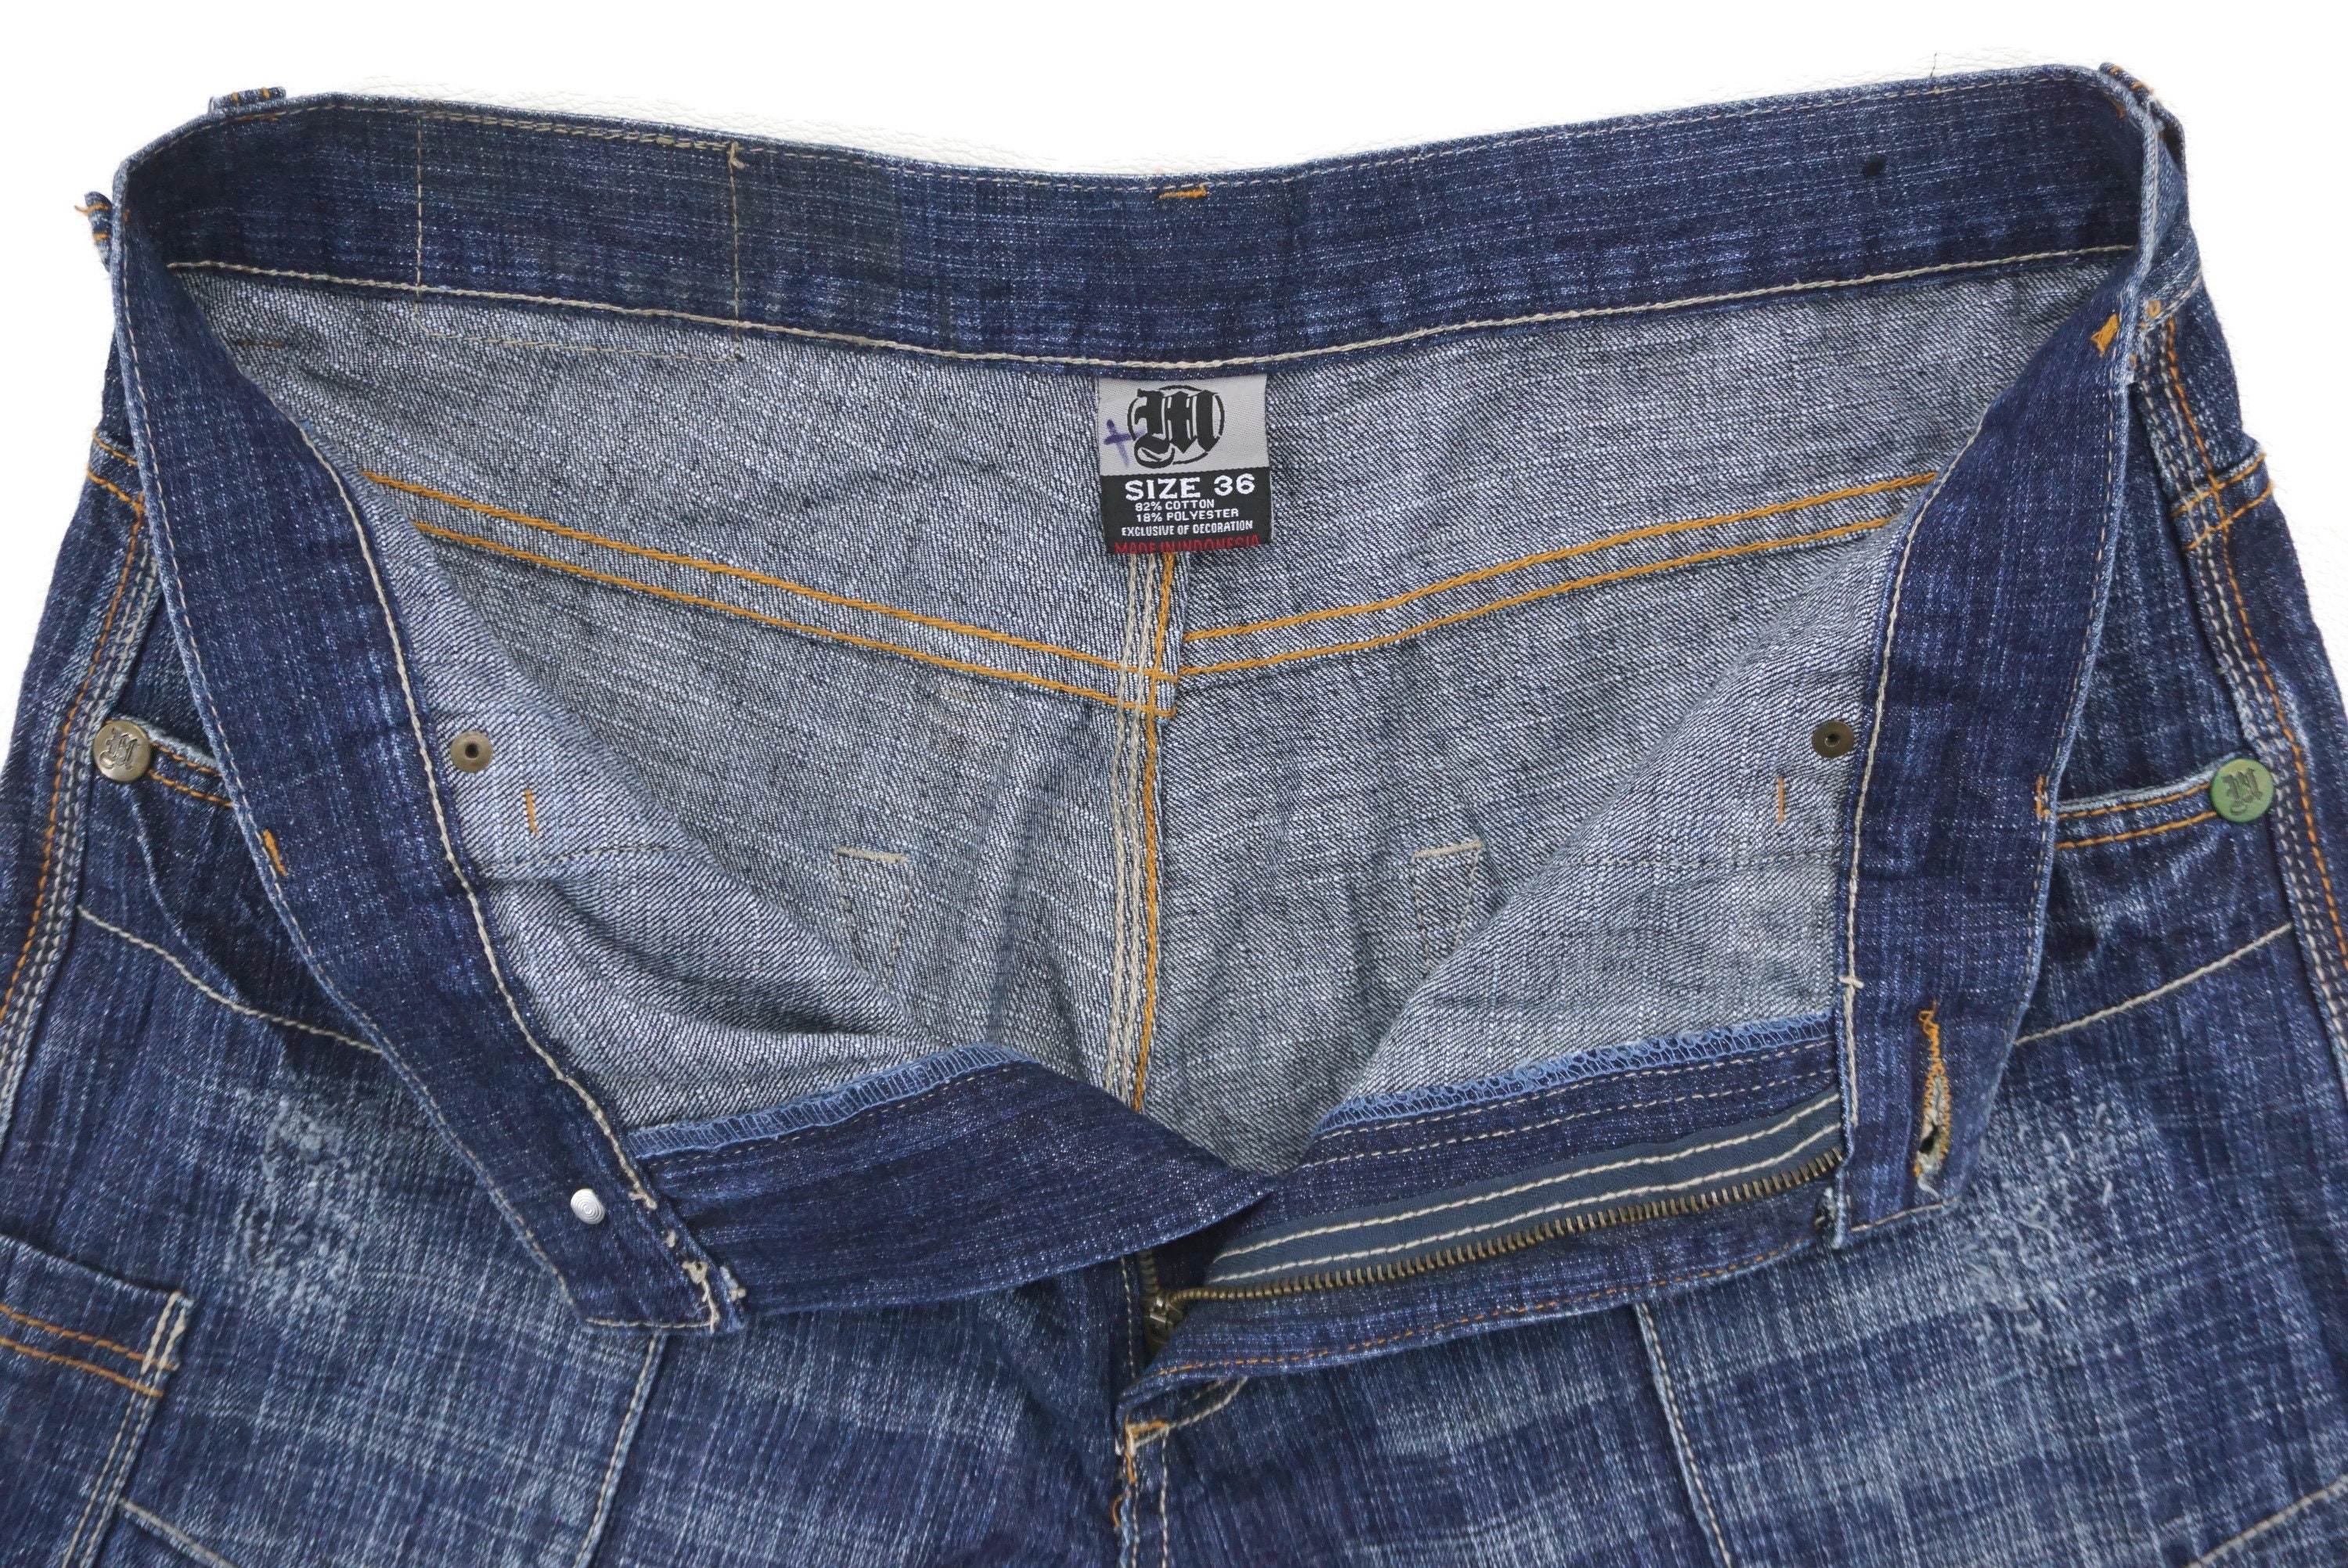 Makaveli Jeans Size 36 W36xL34 Makaveli 2pac Denim Jeans | Etsy